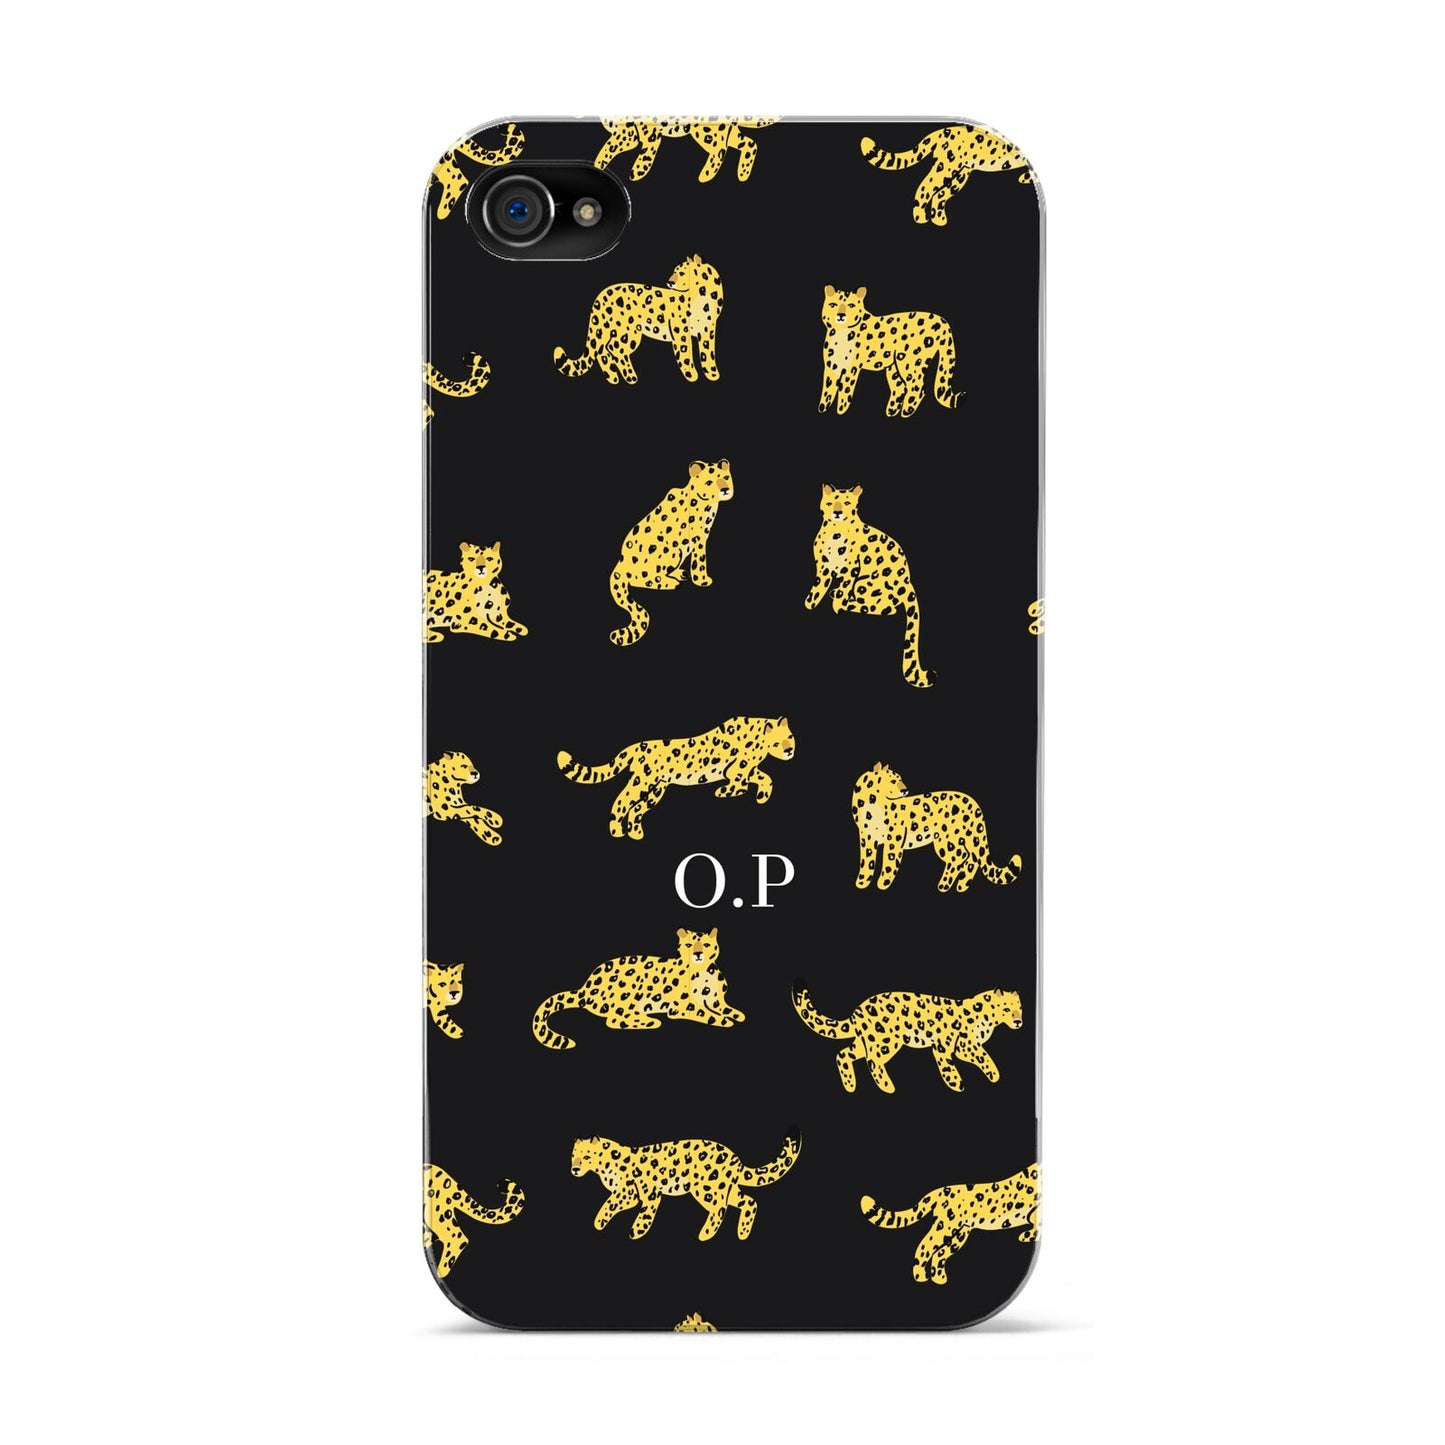 Prowling Leopard Apple iPhone 4s Case